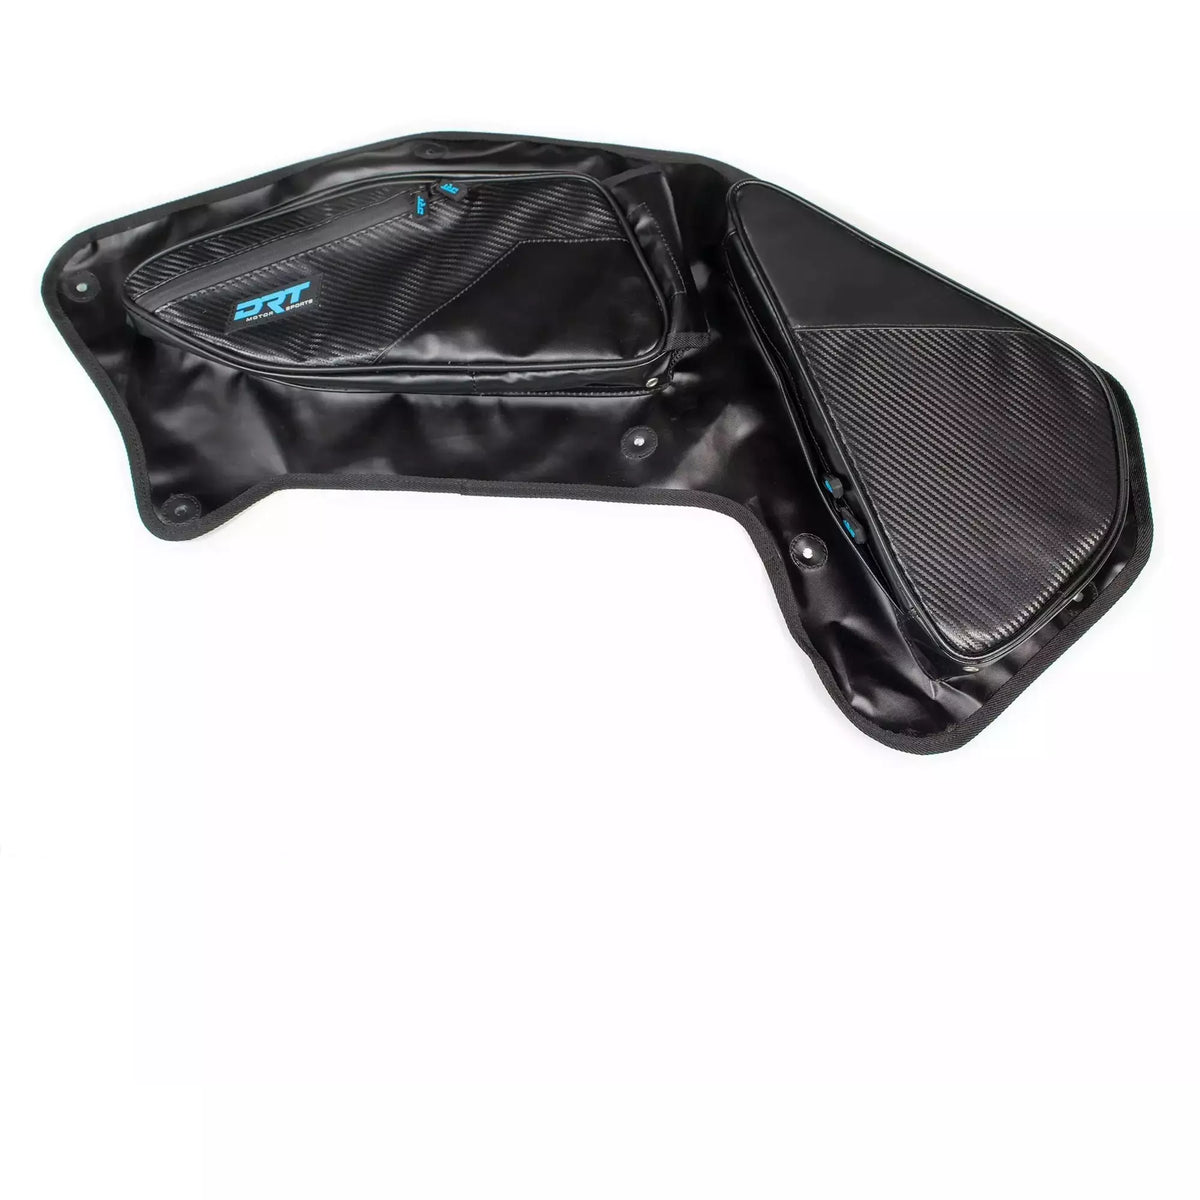 Polaris RZR Pro / Turbo R Rear Door Bags